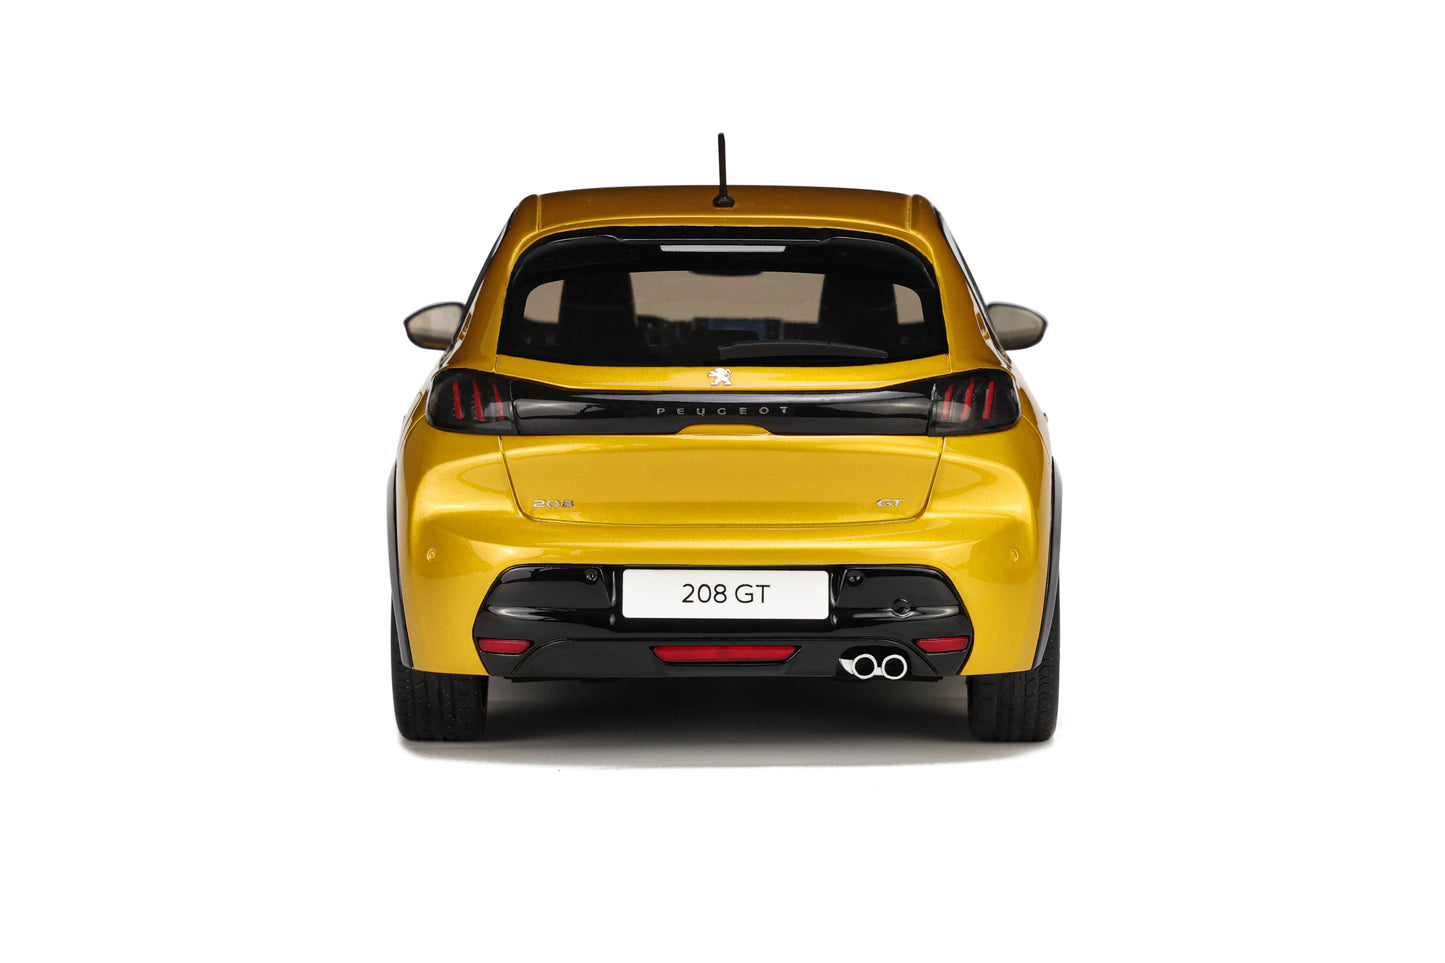 OTTO 1:18 Peugeot 208 GT 2020 Yellow OT930